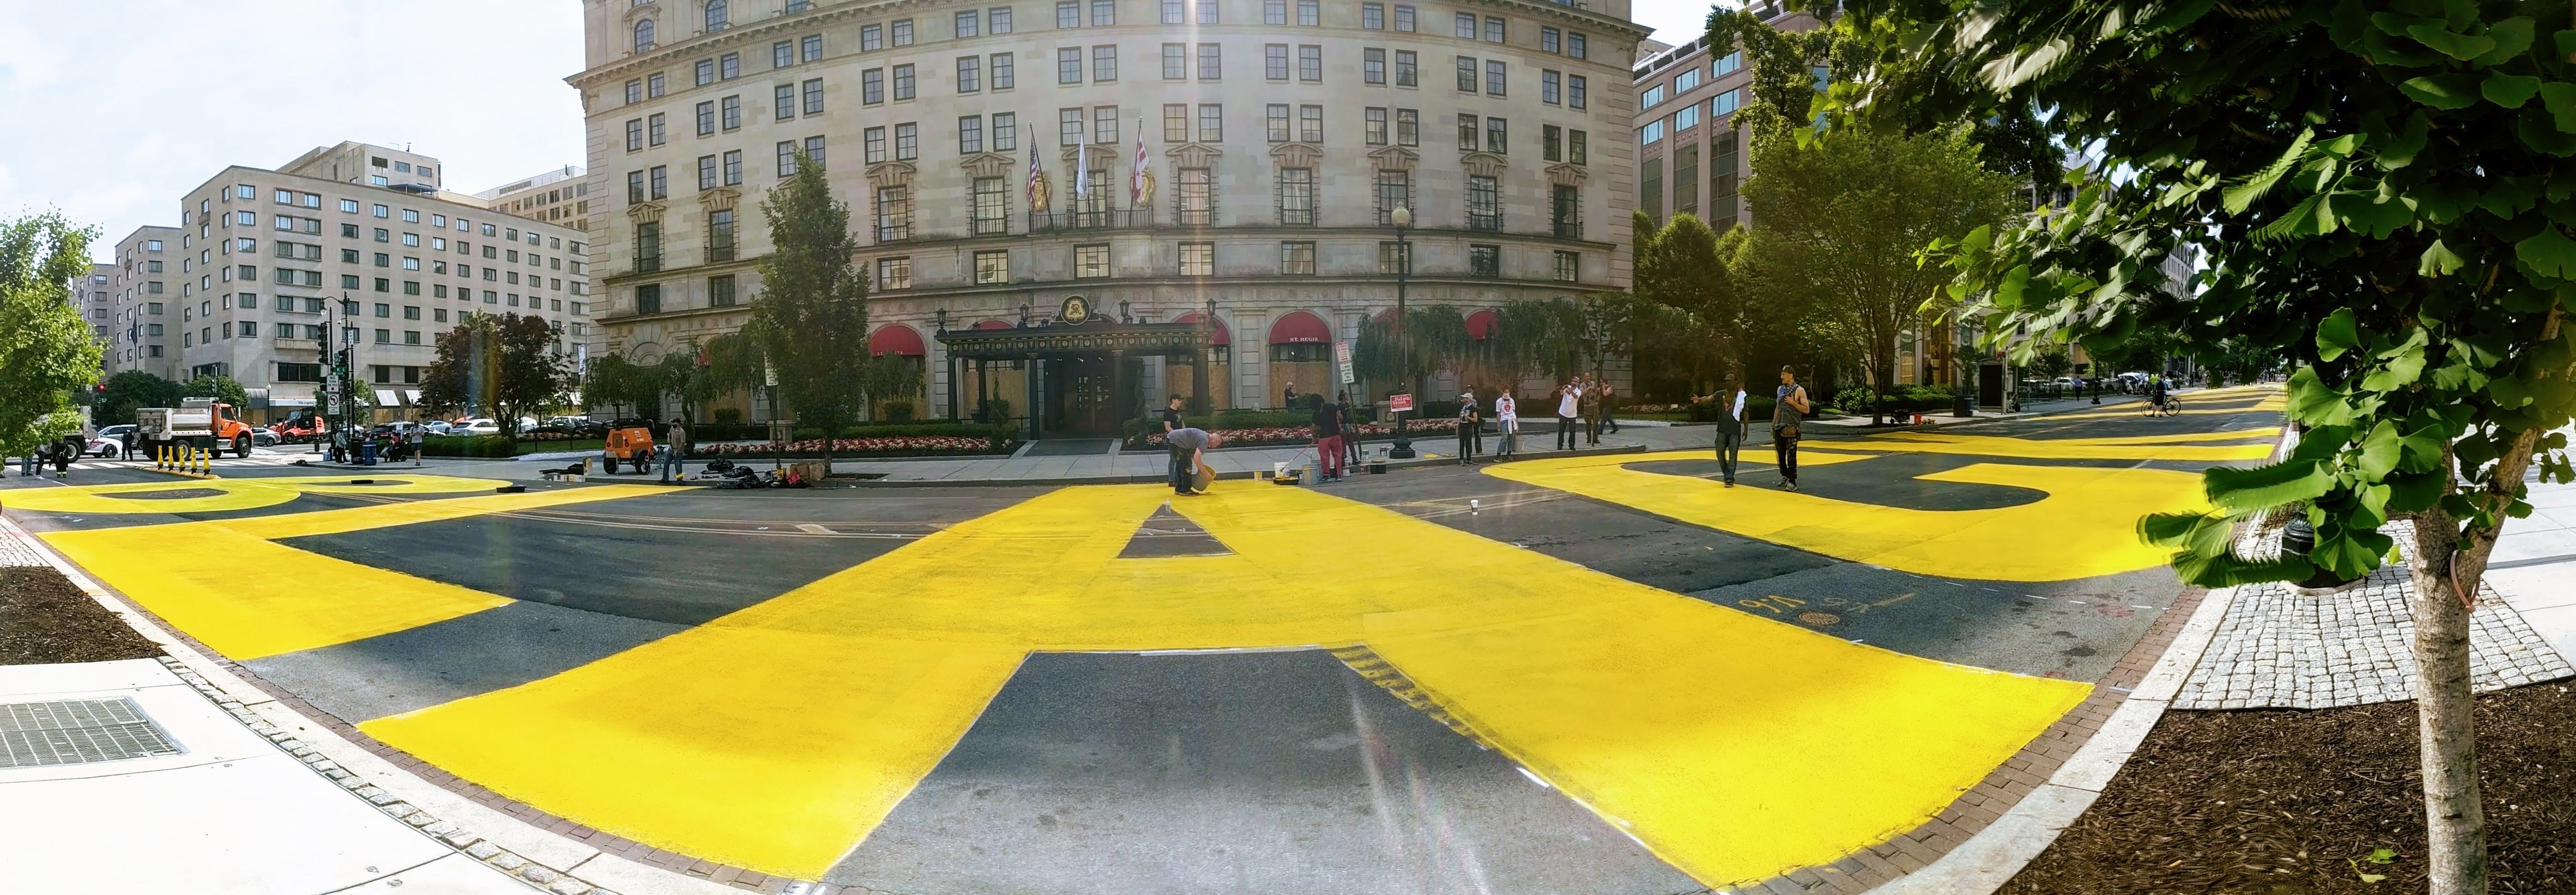 TourBuilder Brings Google Street View to Black Lives Matter Plaza